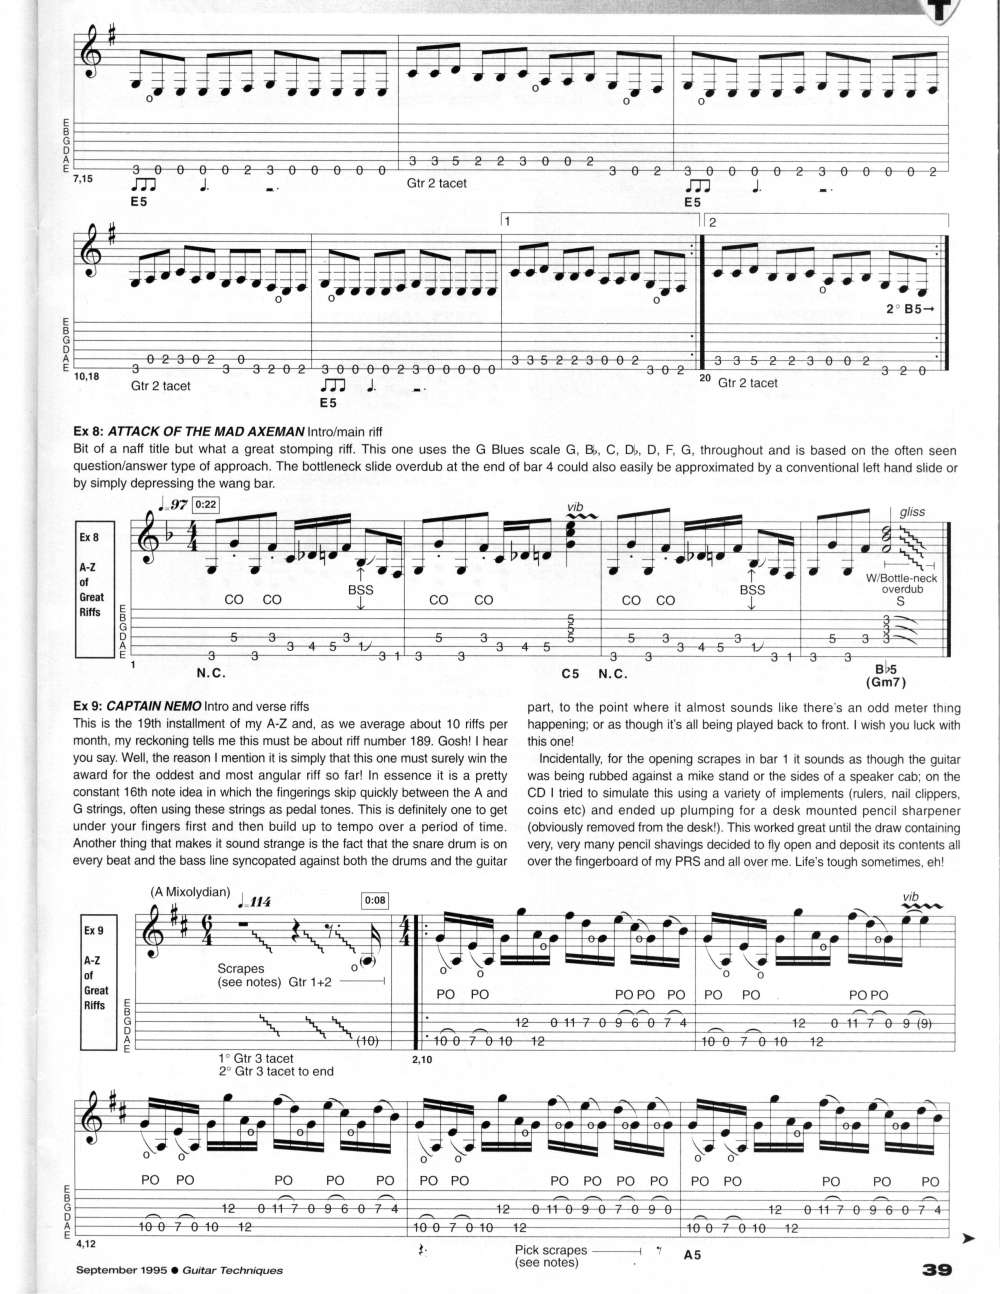 Michael Schenker - Mcauley Schenker Group - Perfect Timing - Guitar Tab  Book - #542639363